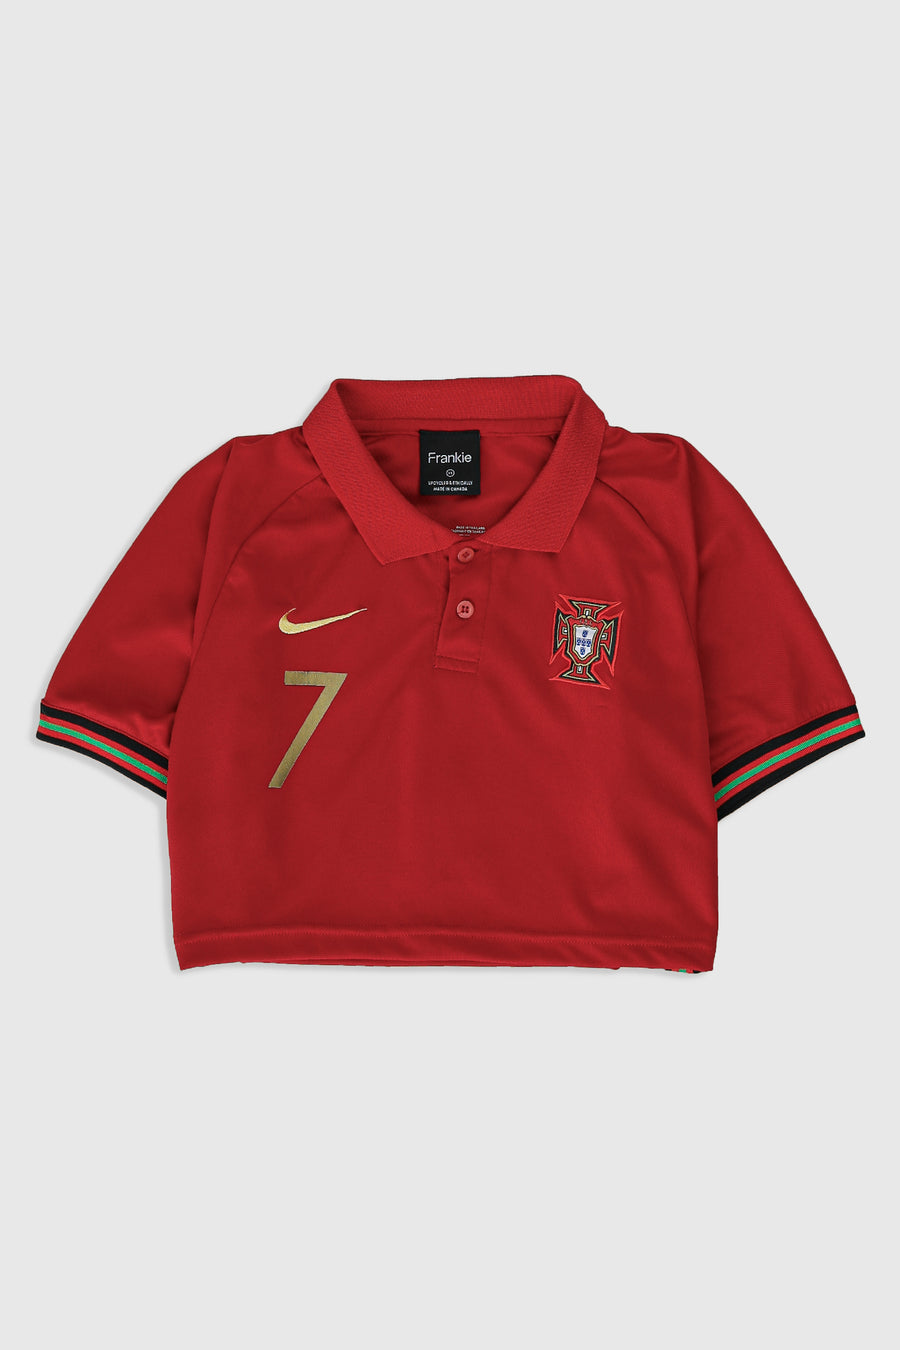 Rework Crop Portugal Soccer Jersey - XS